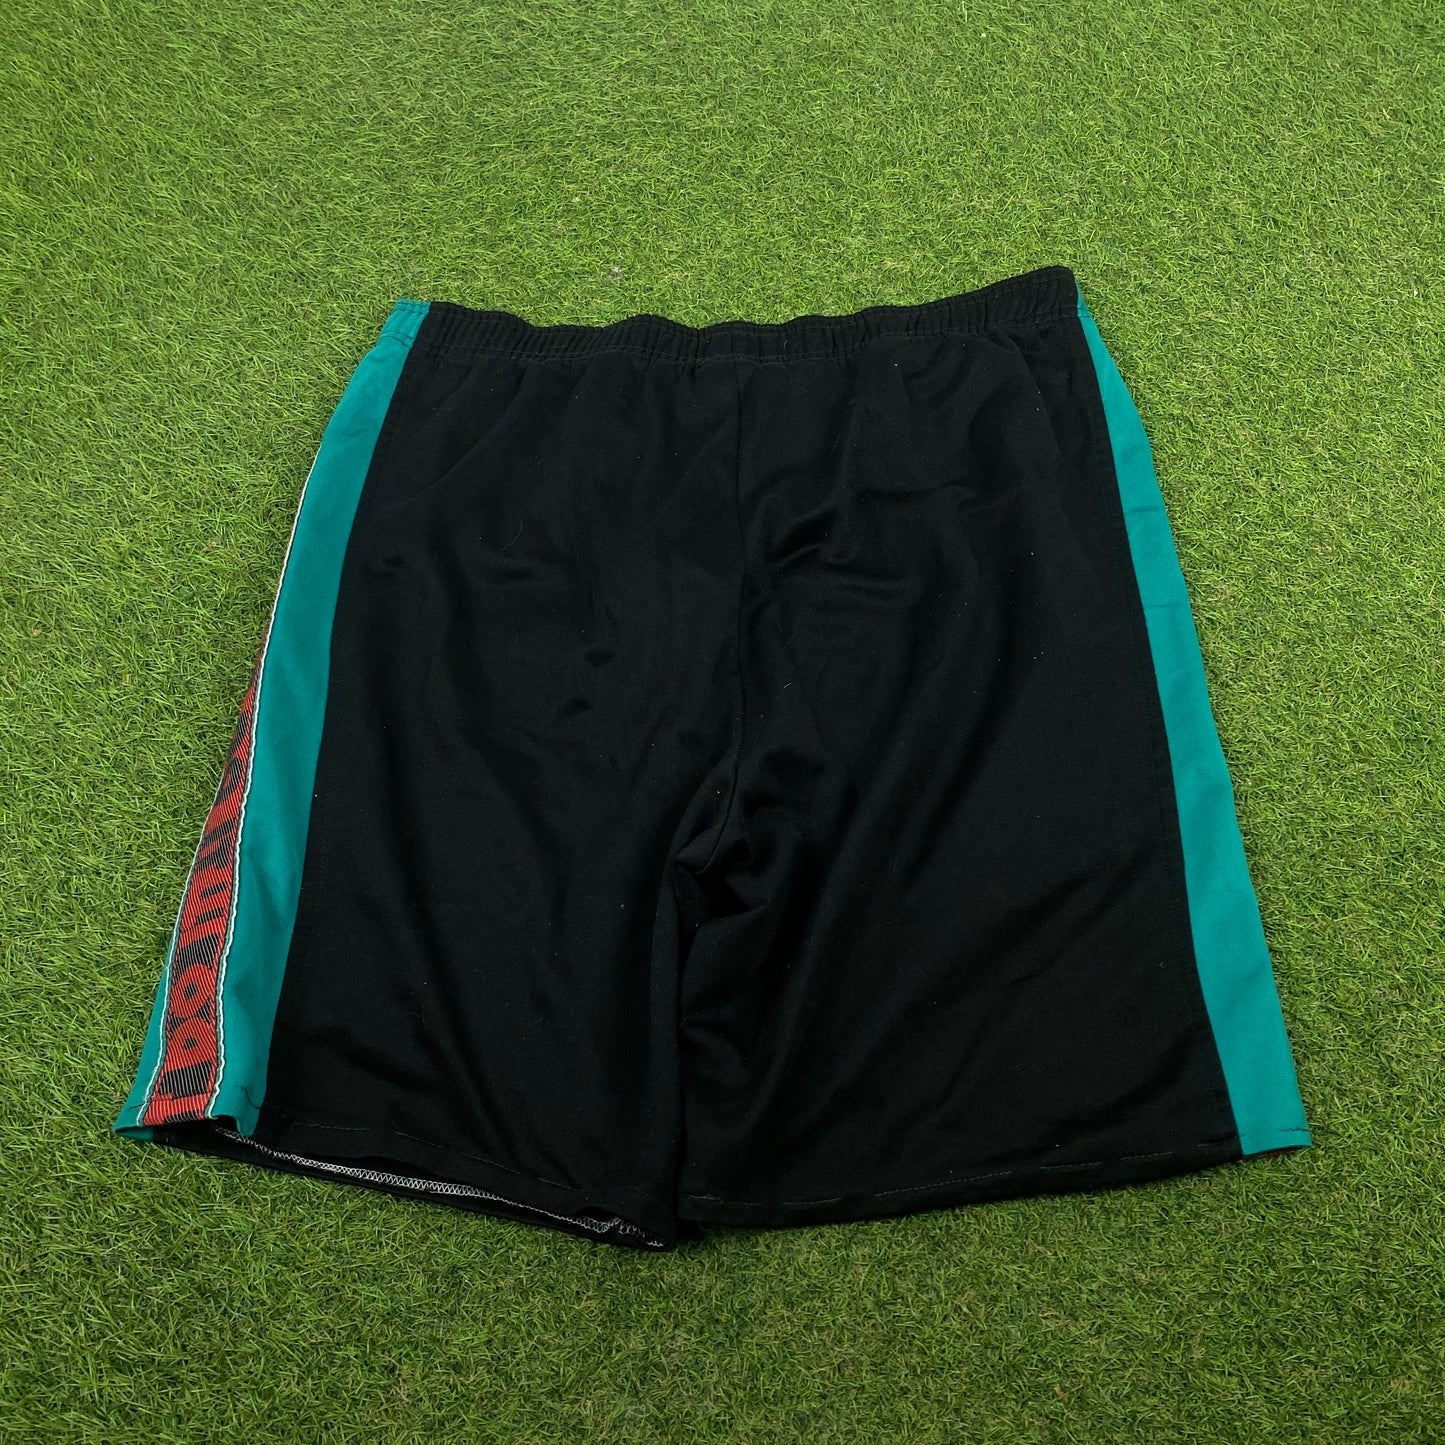 90s Nike Zip Pocket Shorts Black XL